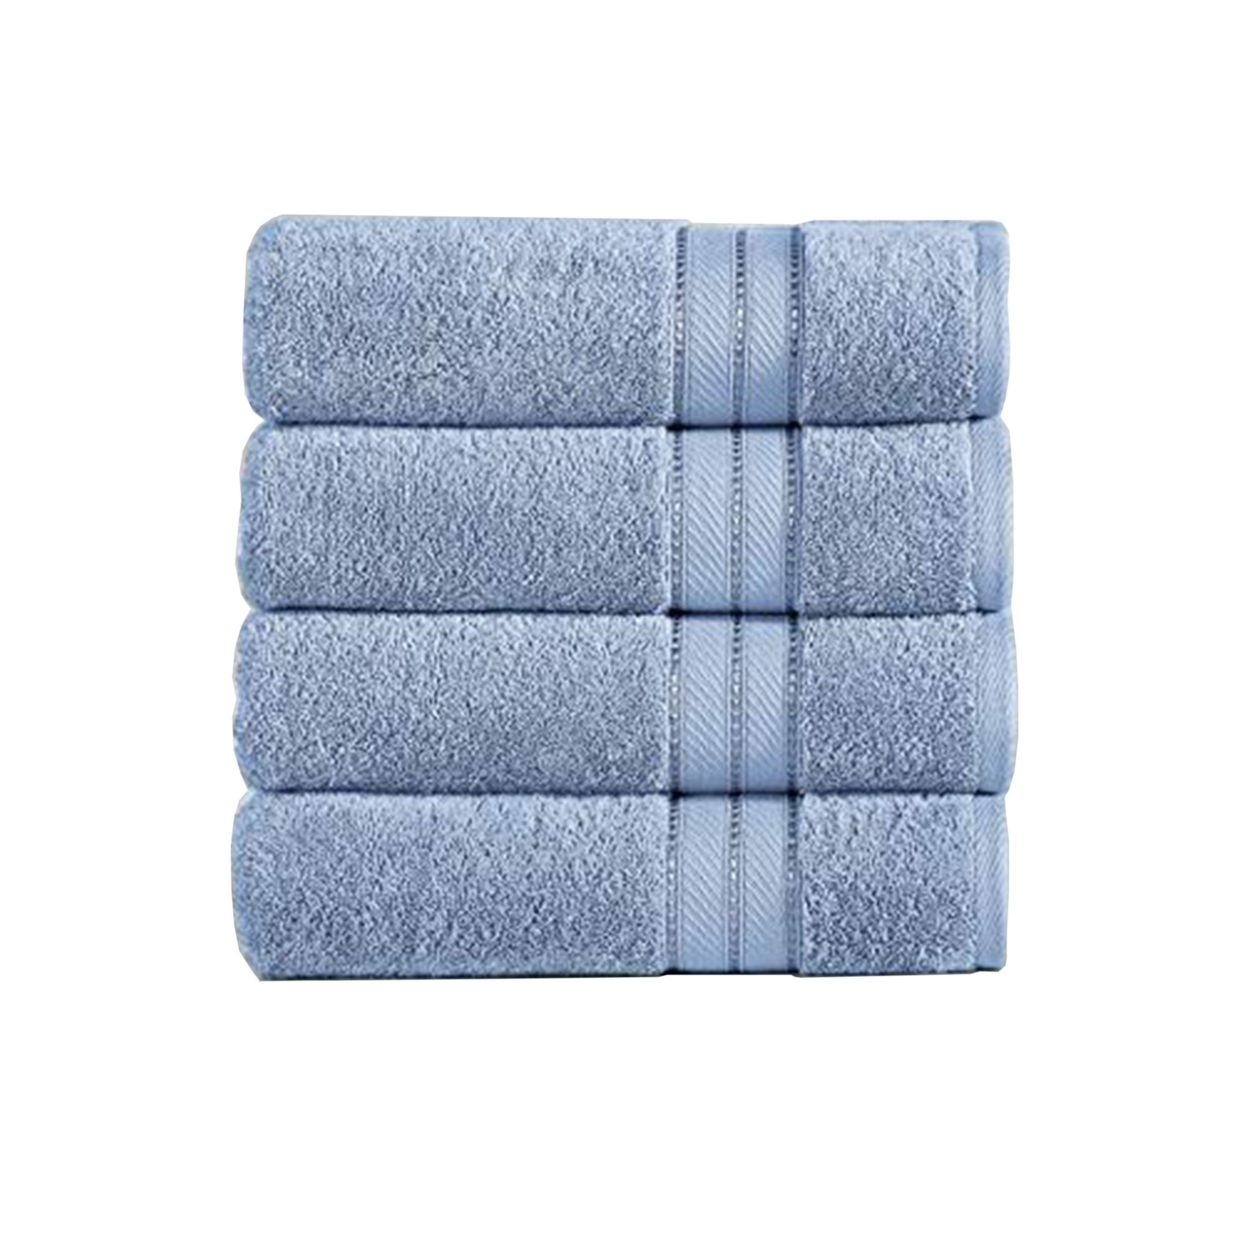 Bergamo 4 Piece Spun Loft Fabric Towels With Striped Pattern The Urban Port, Blue- Saltoro Sherpi